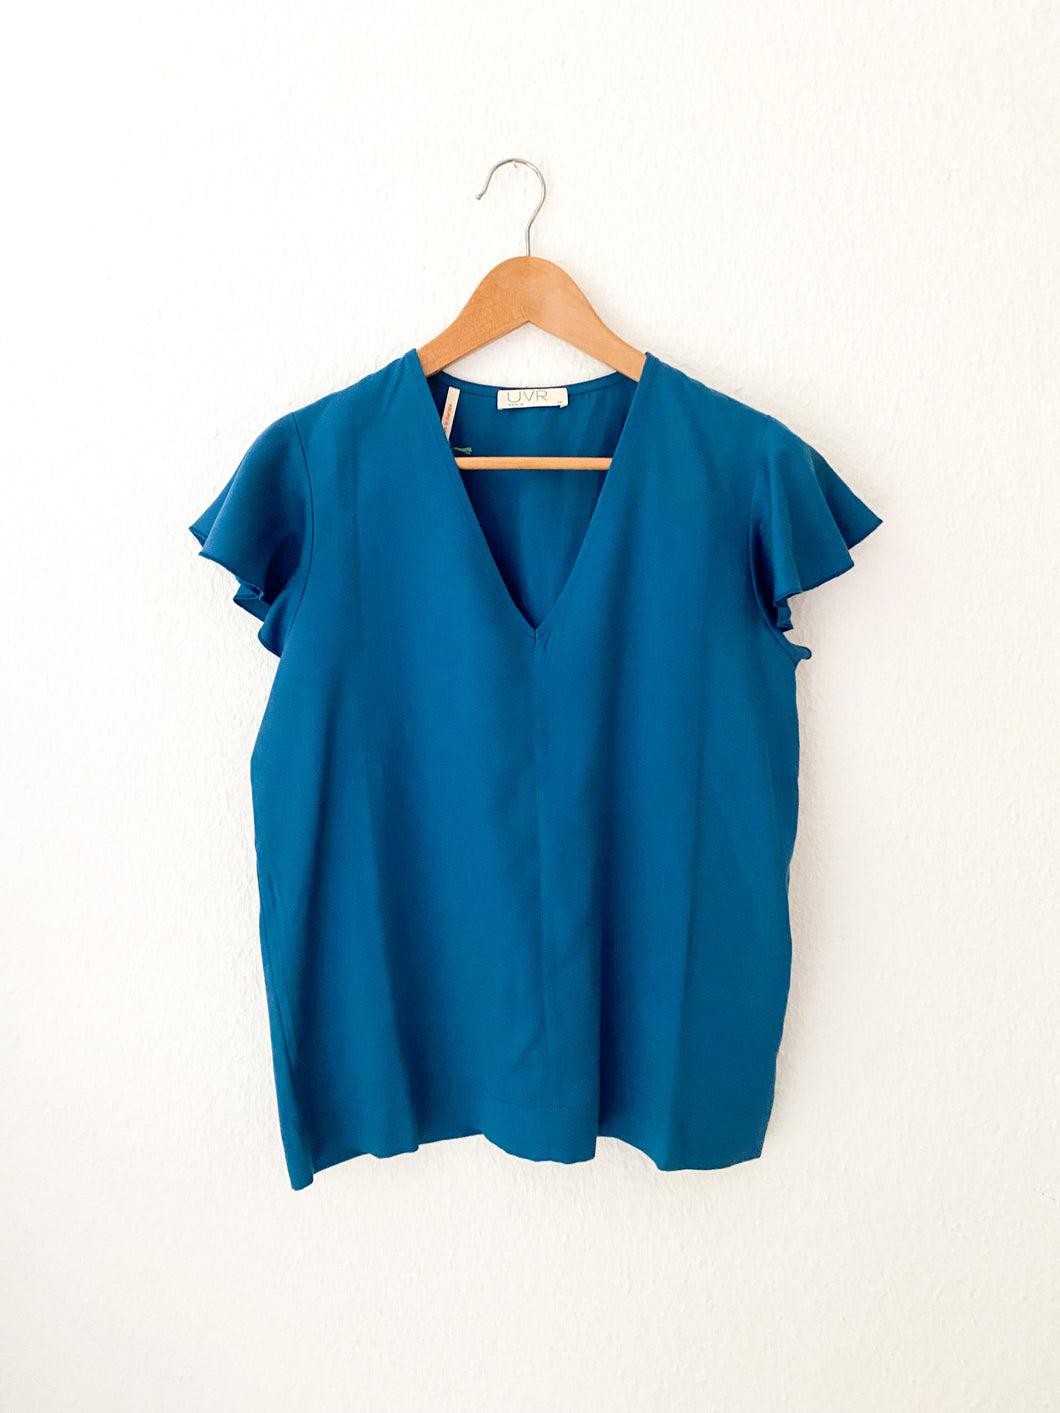 Shirt UVR Berlin, Style: NATAINA, Farbe: 22107 (petrol), *Sale*